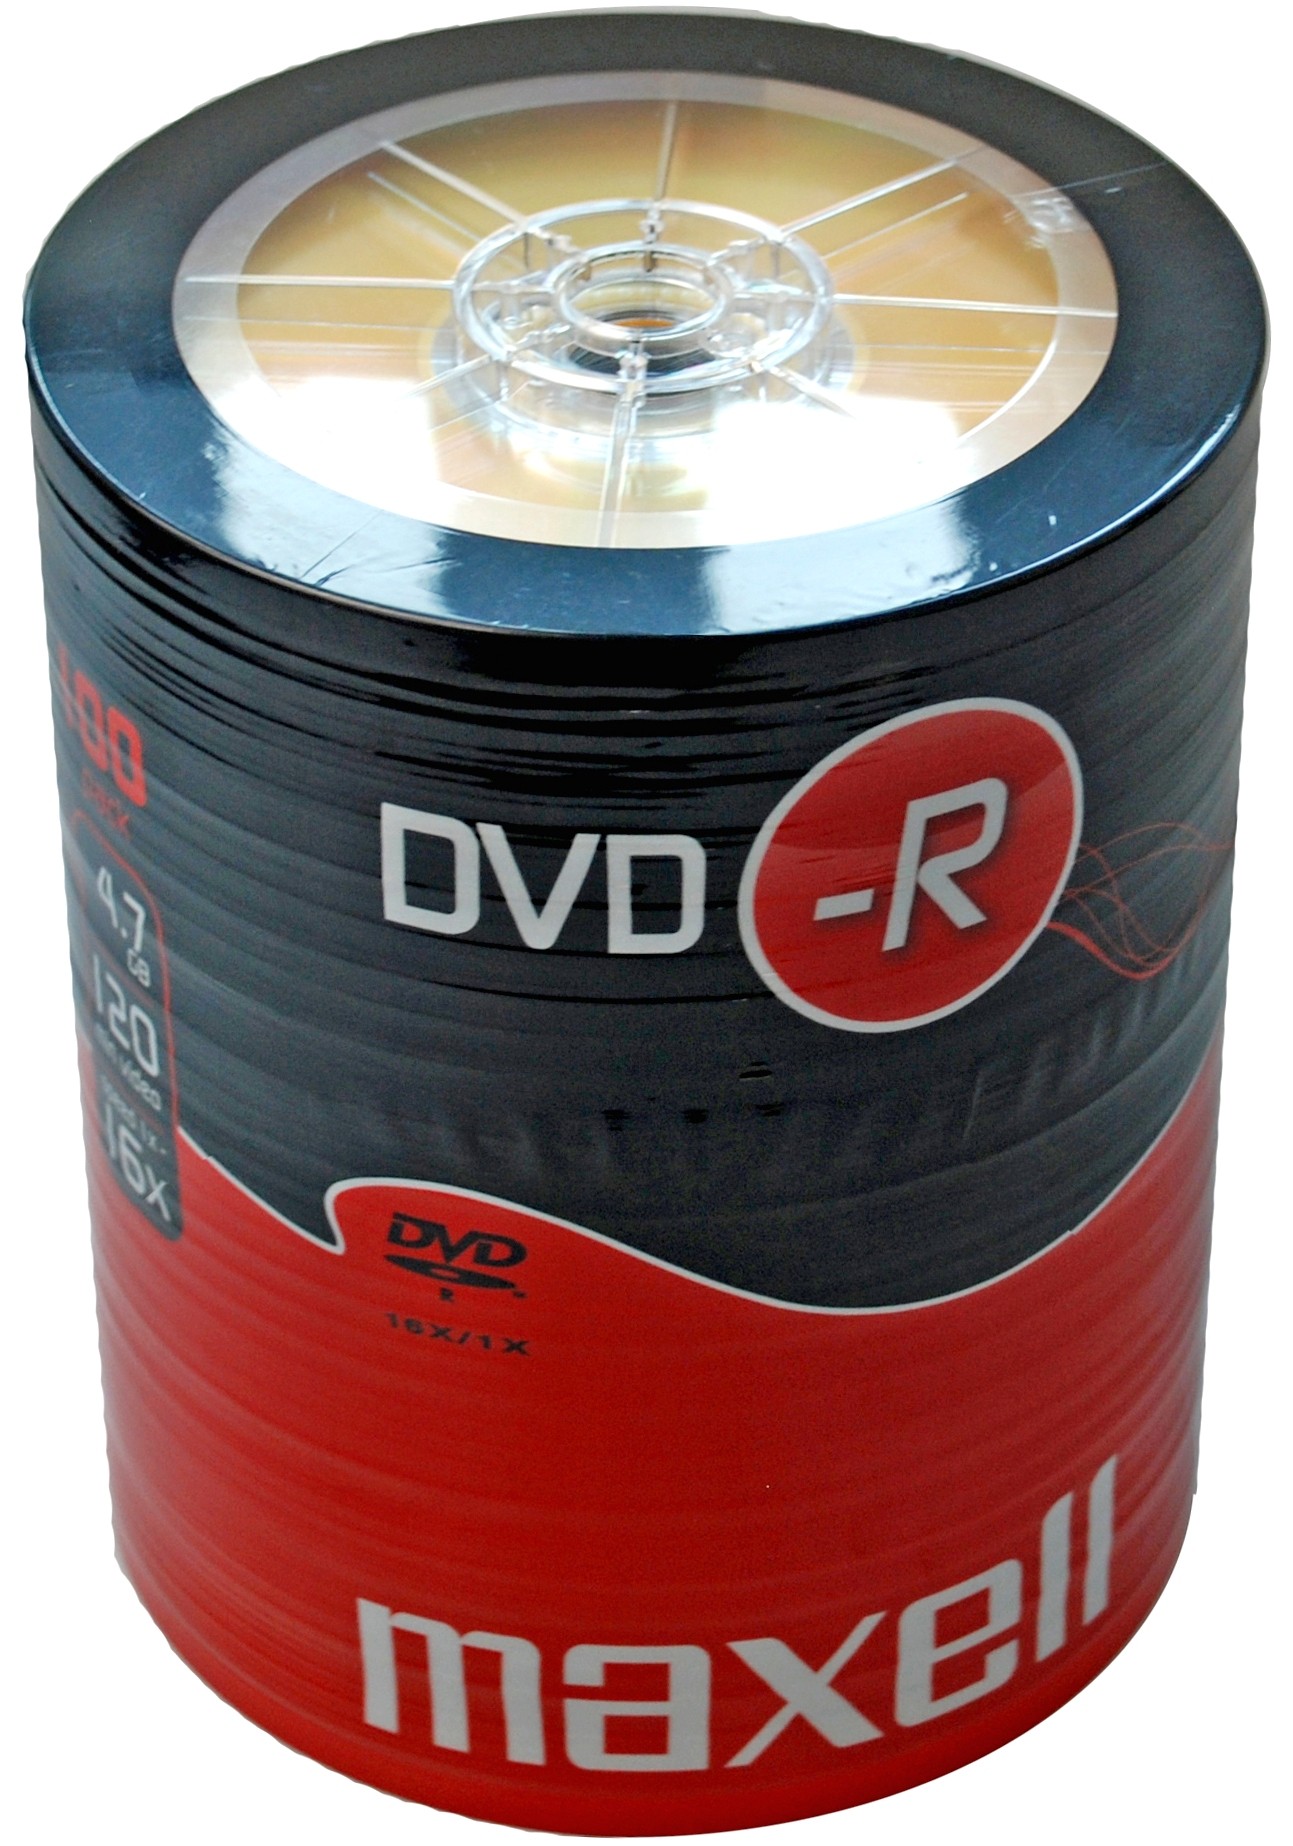 dvd-r 4.7gb, 16x, 100buc pe folie, maxell